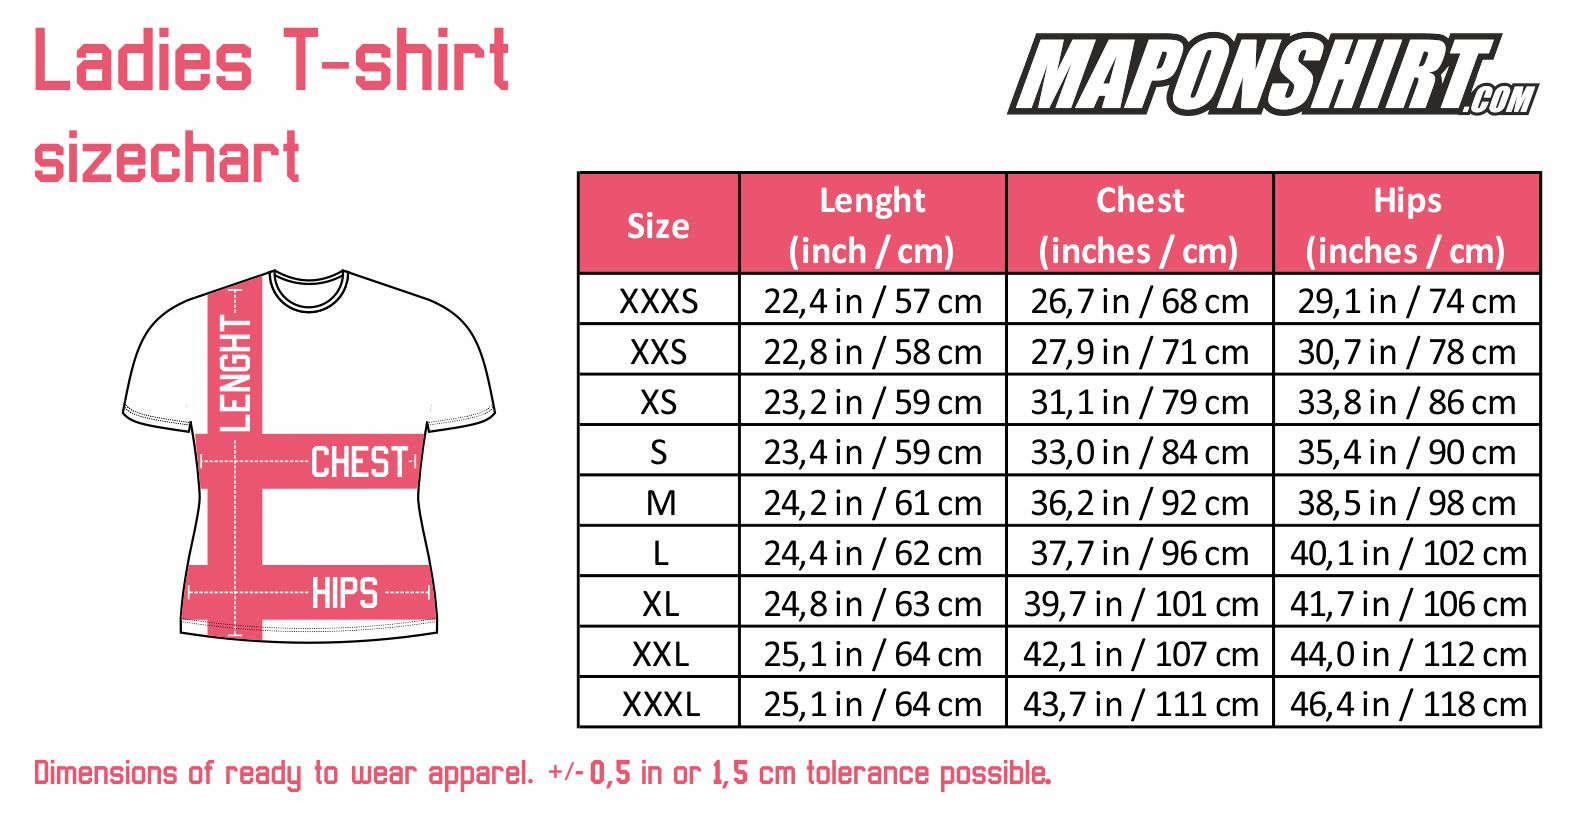 Shirt Chart Size Cm